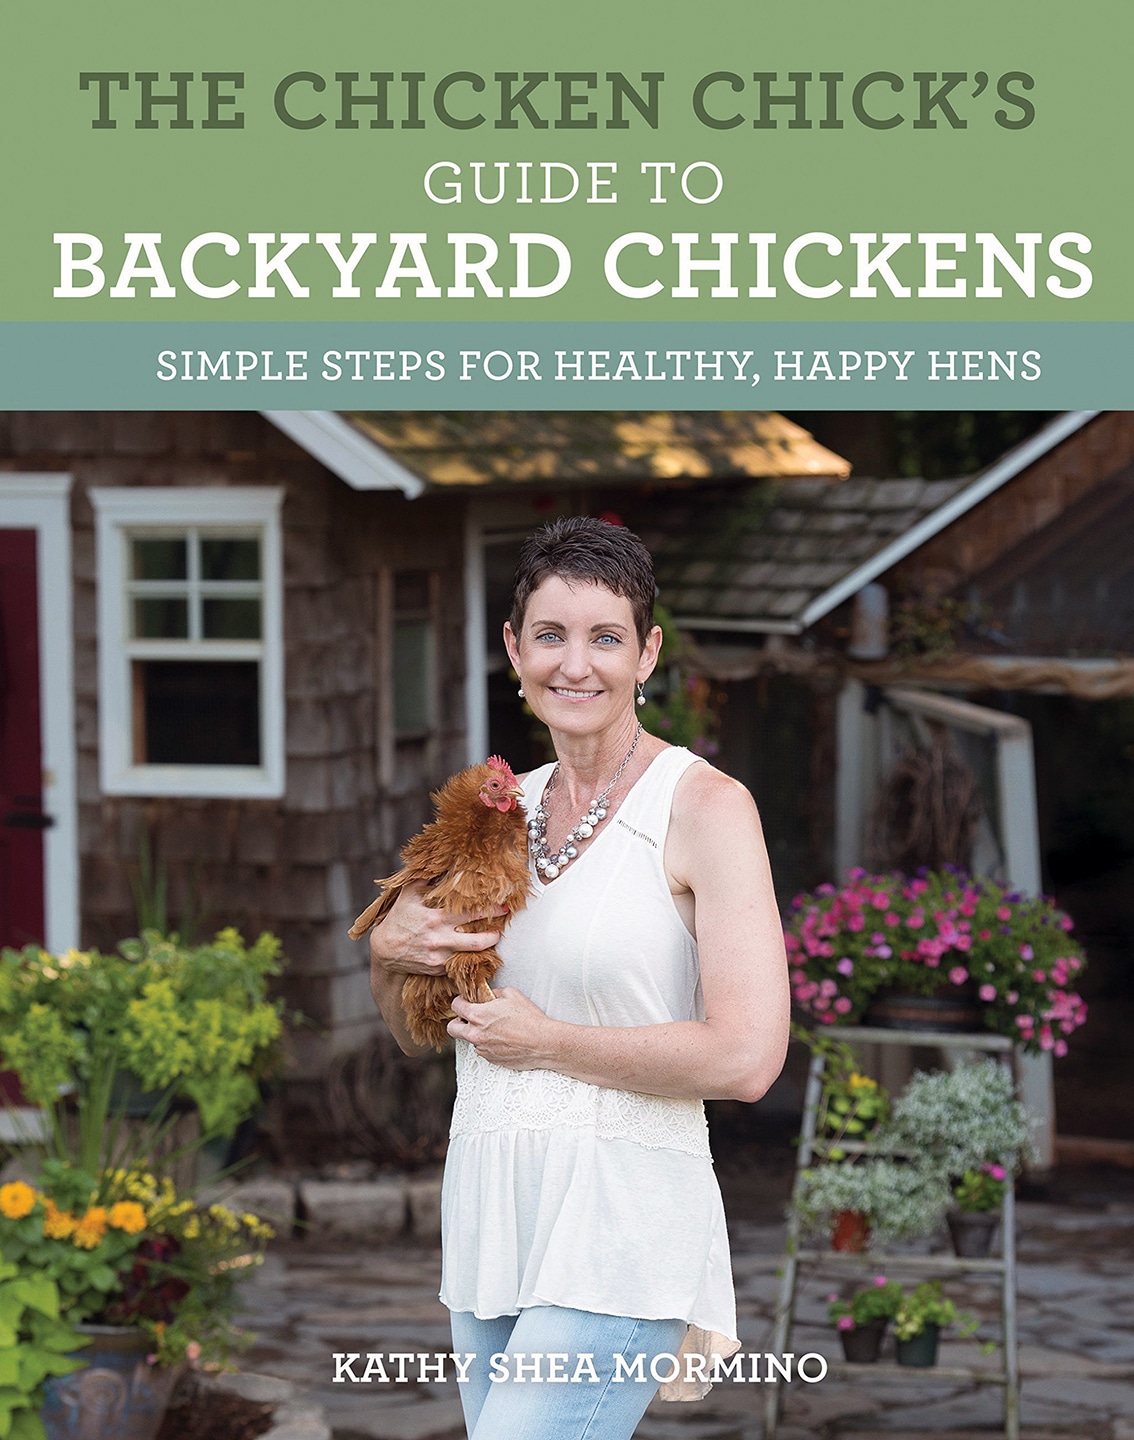 Books on raising chickens for eggs